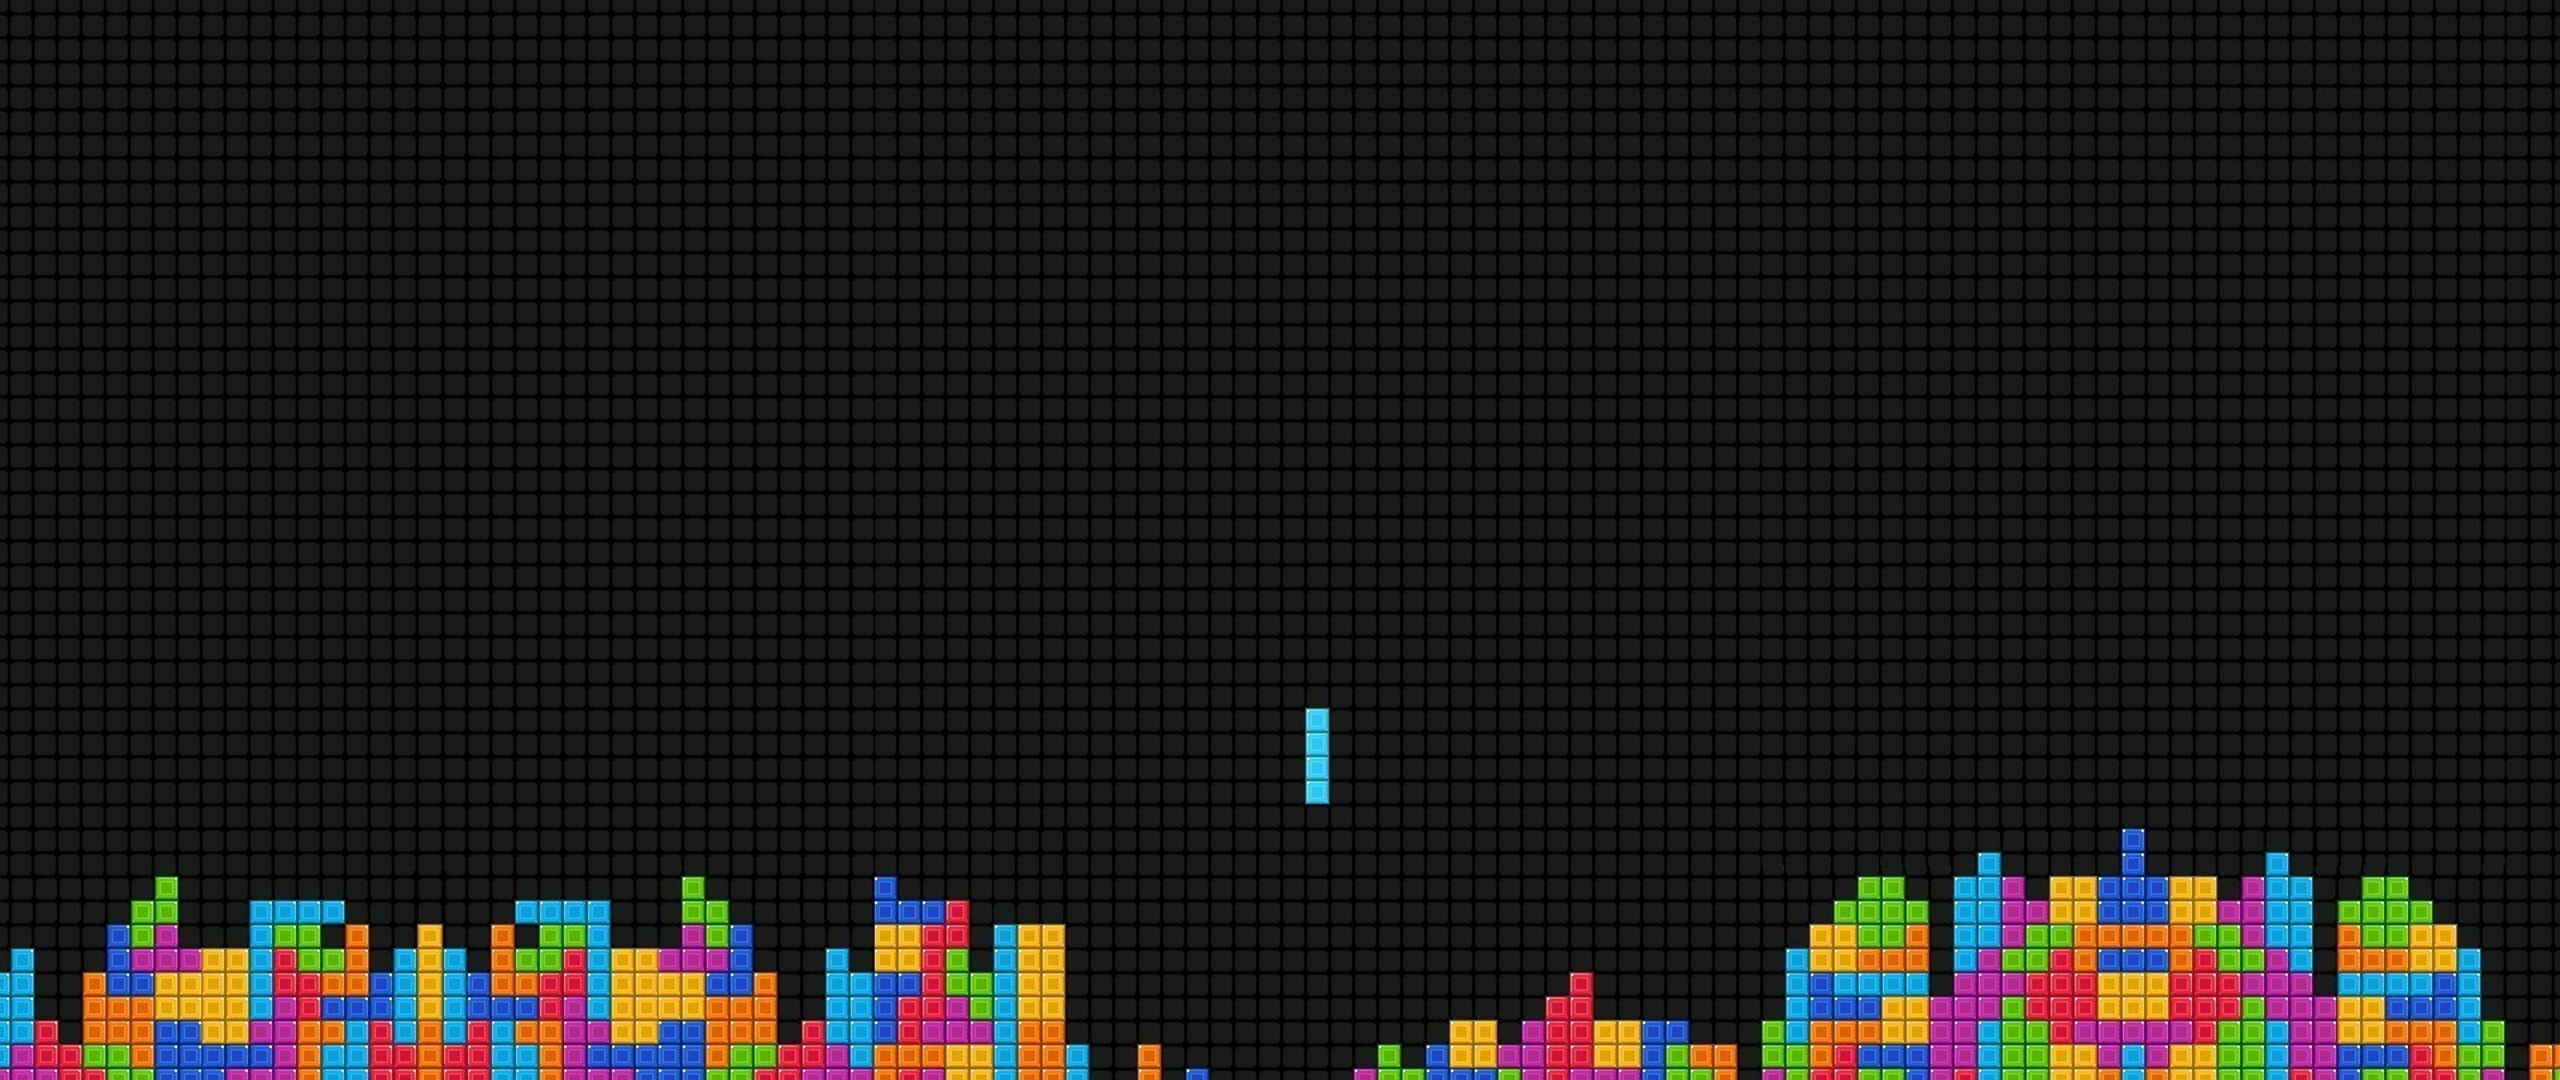 tetris-abstract-2560x1080.jpg